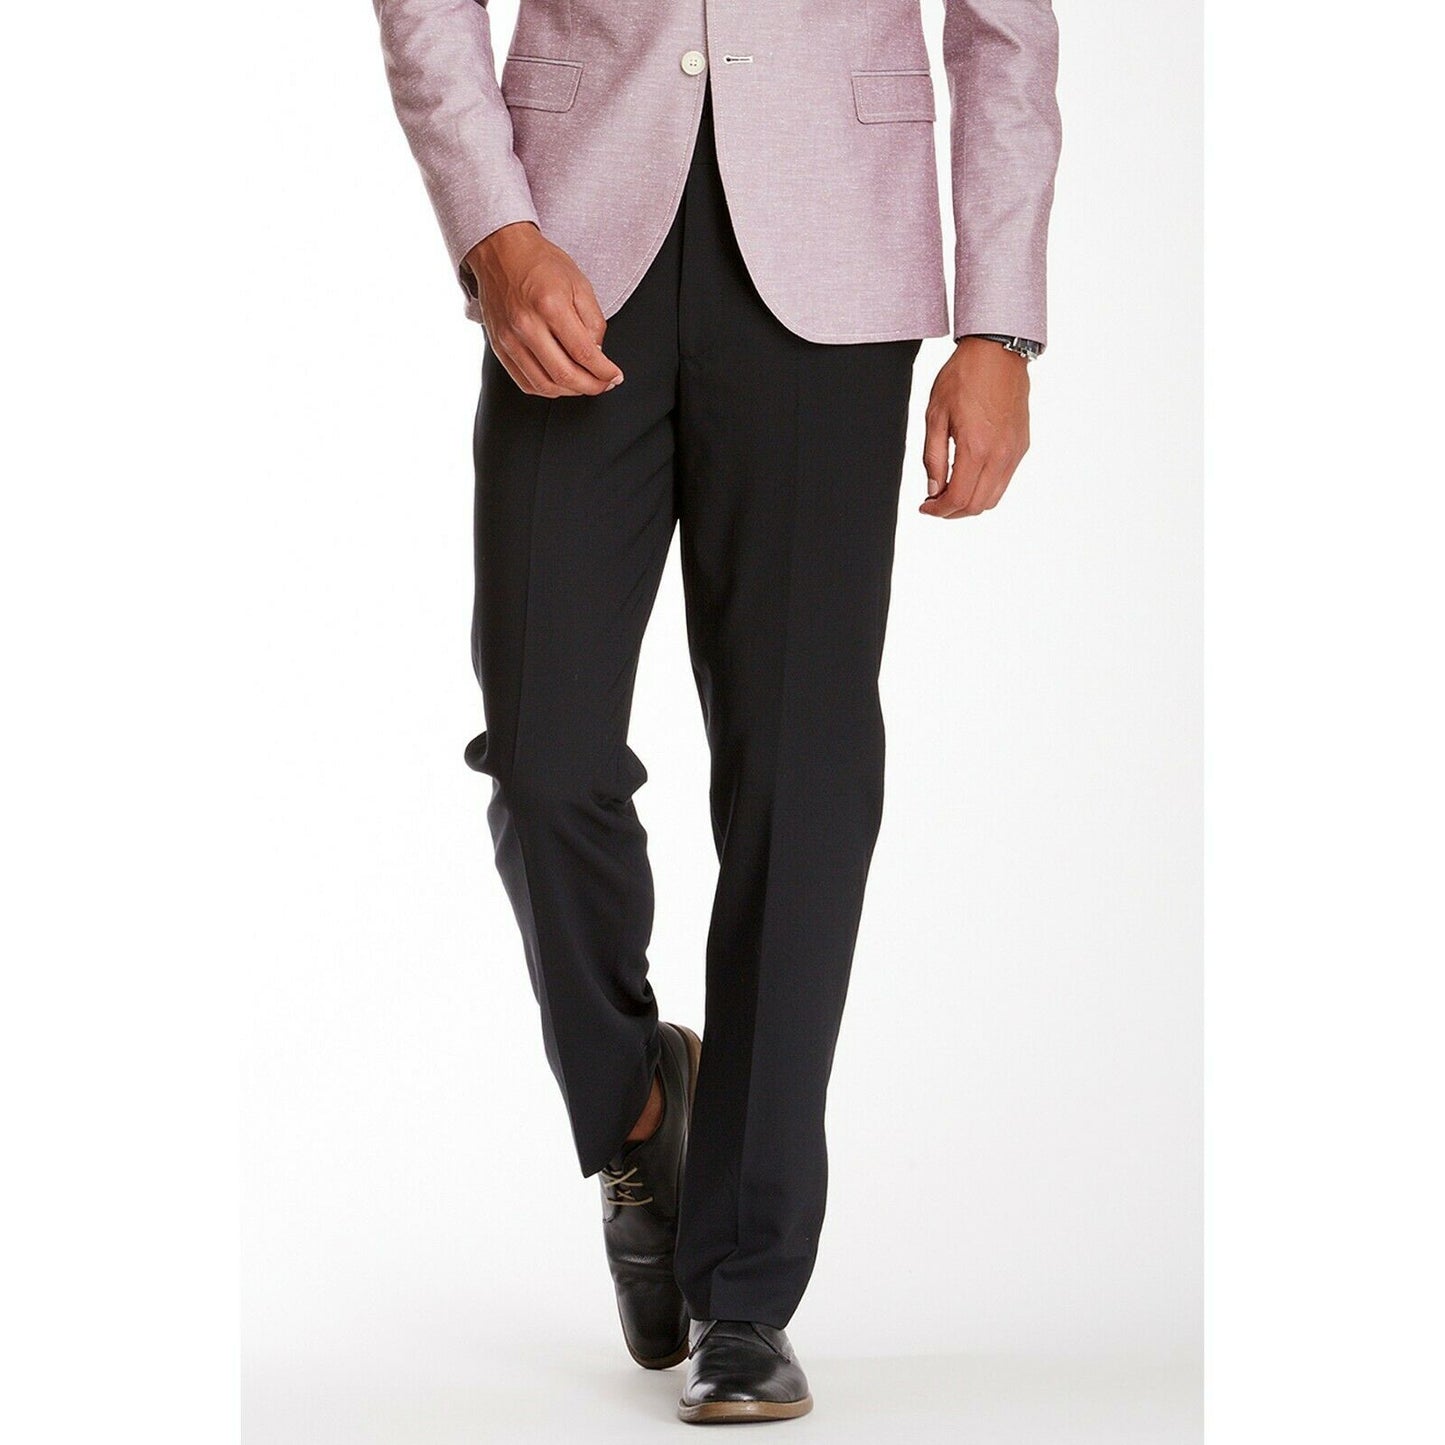 Ike Behar Mens Wool Flat Front Dress Suit Slacks Pants Black 40 NWT